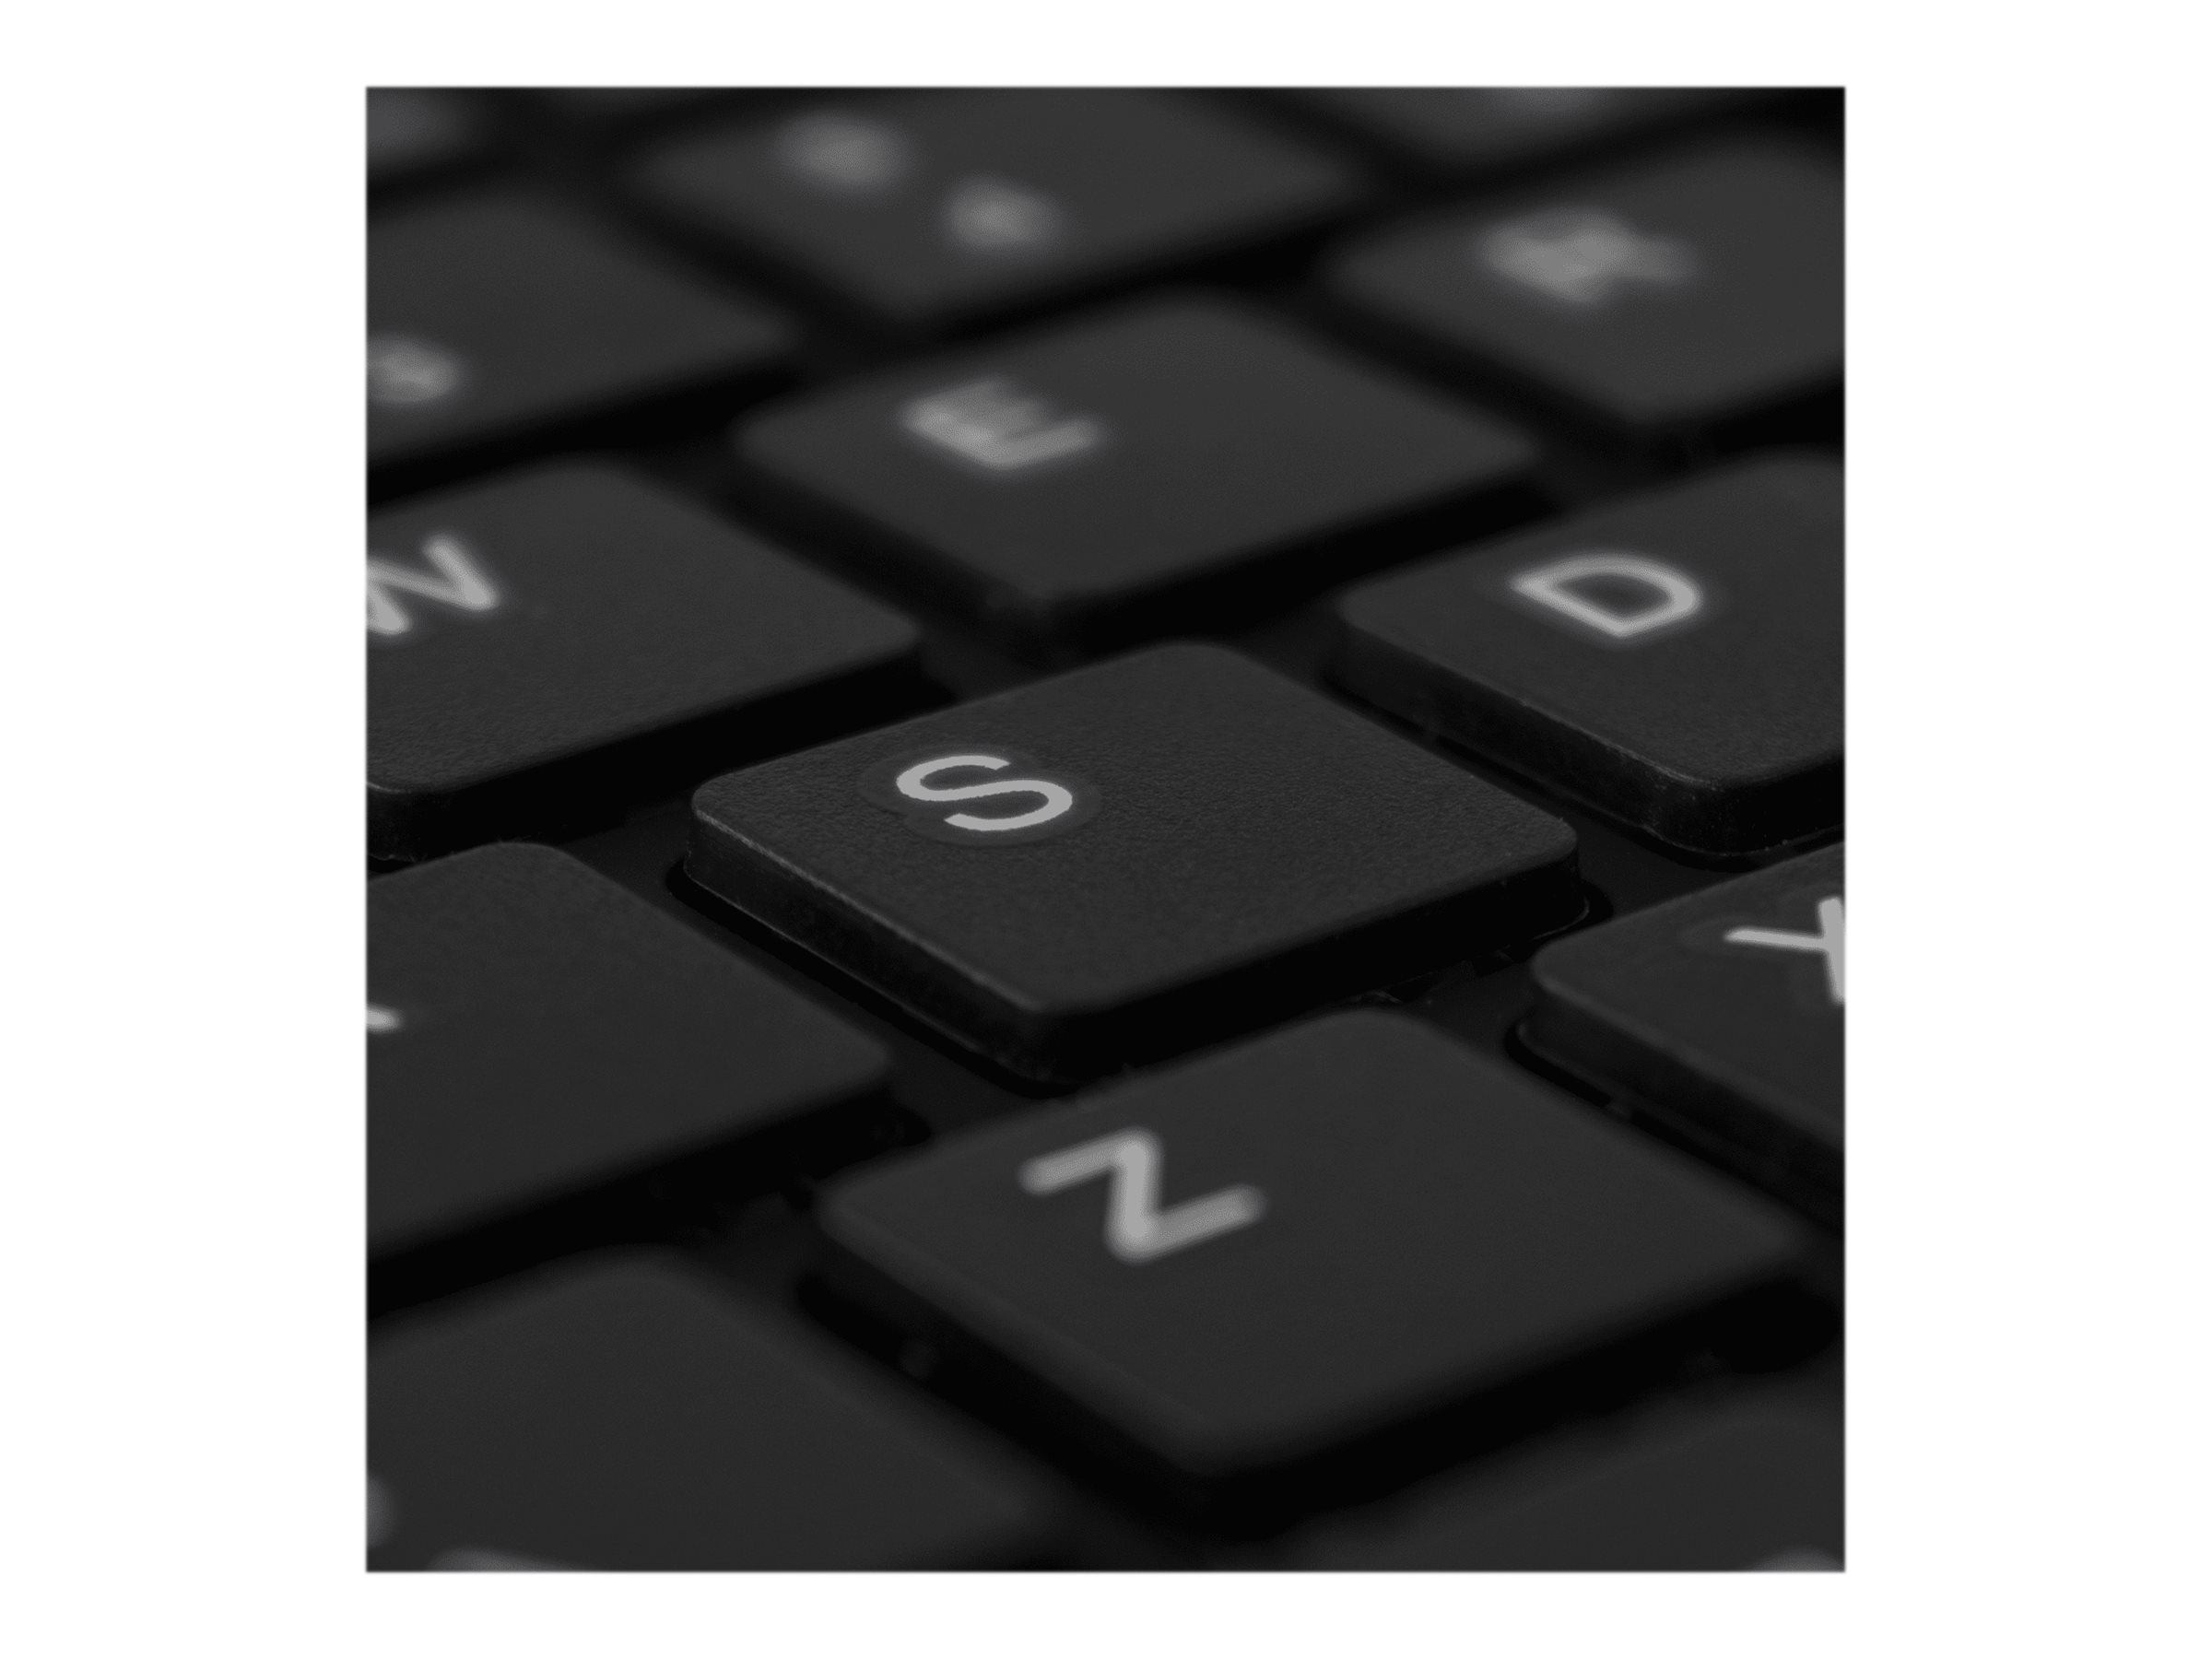 R-GO TOOLS Split Tastatur DE-Layout schwarz